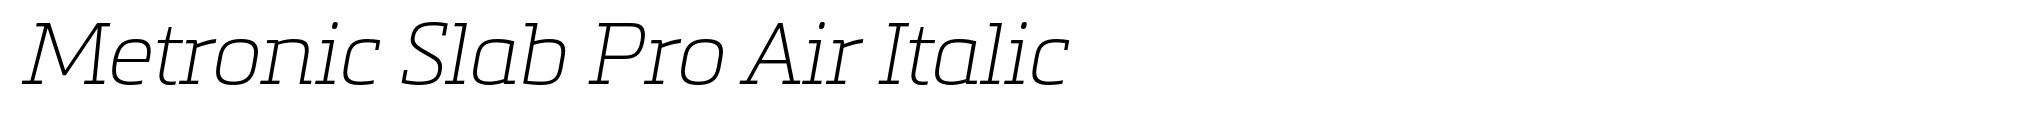 Metronic Slab Pro Air Italic image